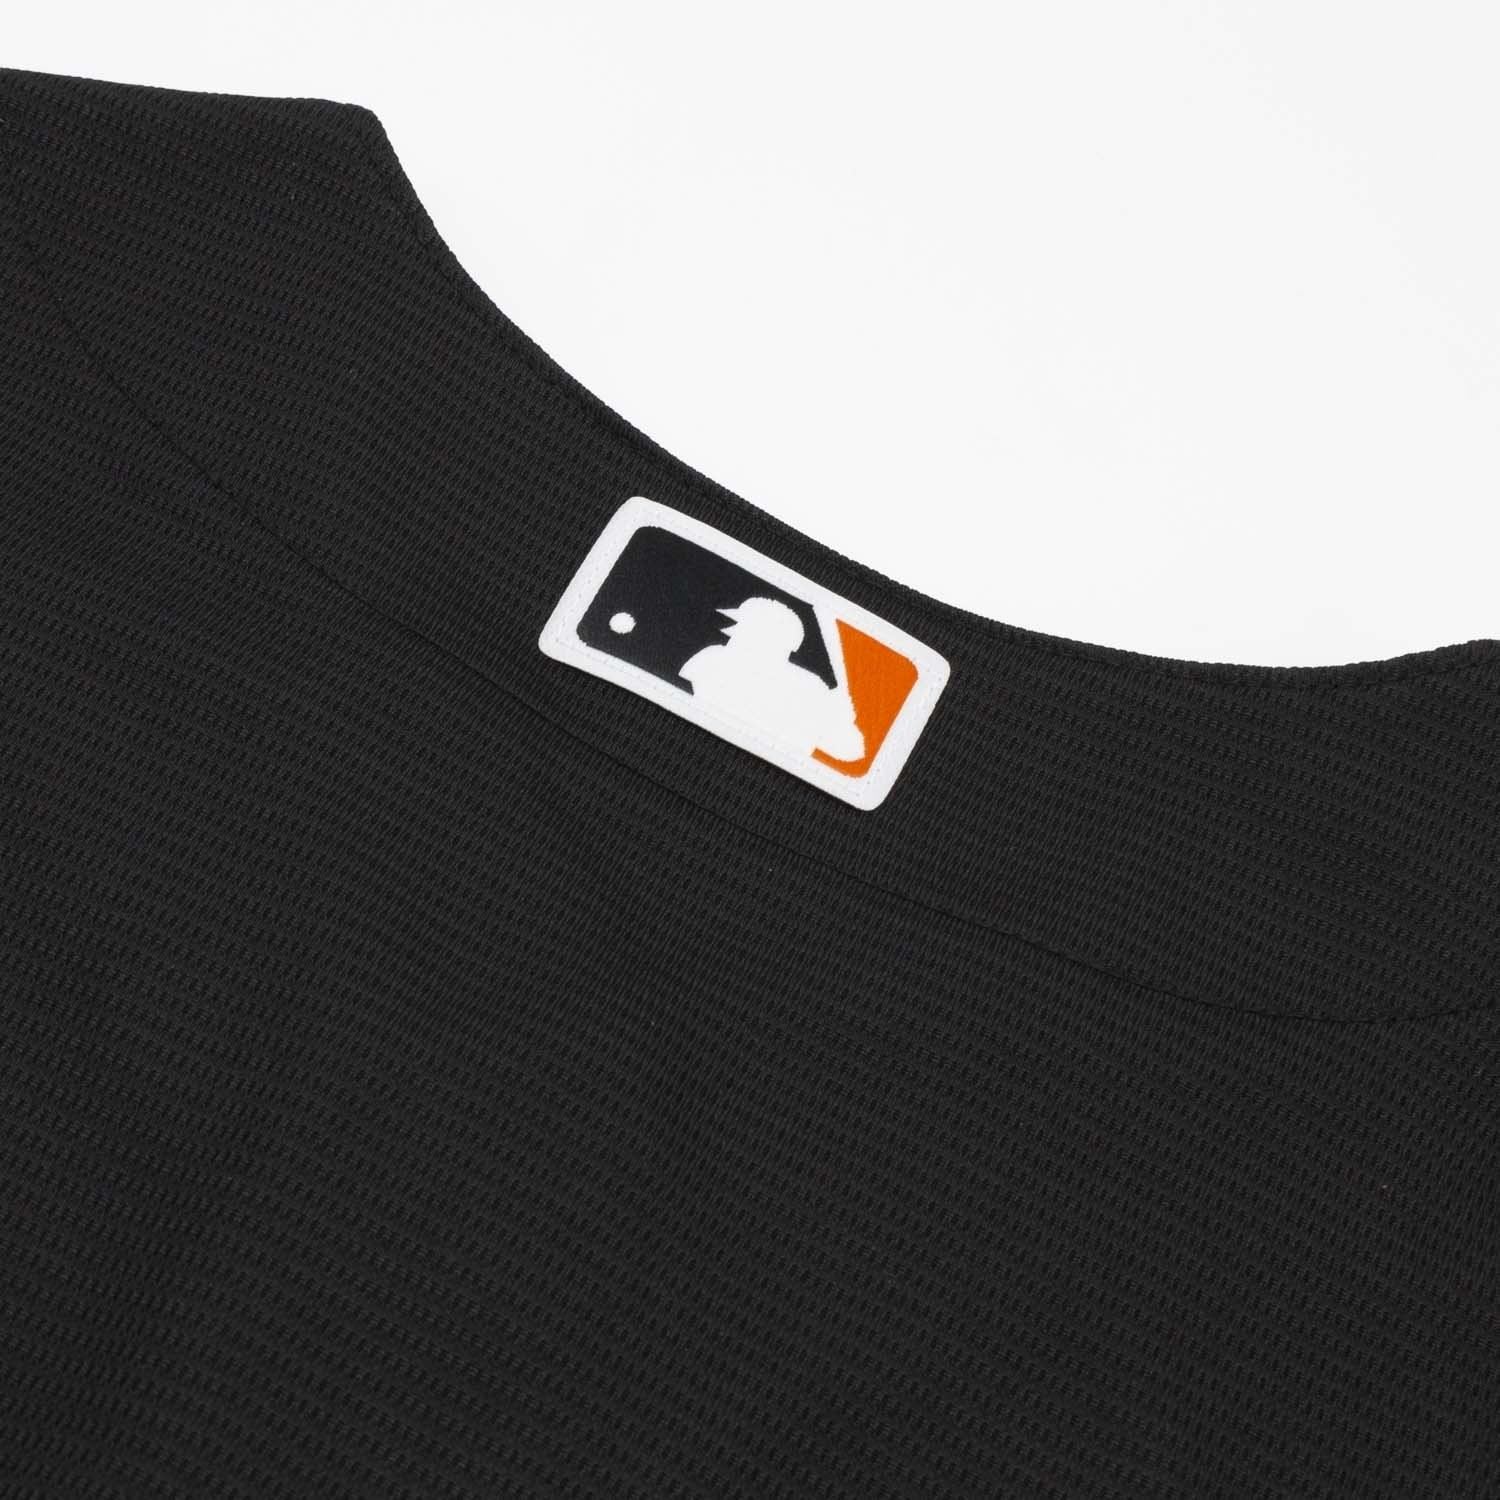 Baltimore Orioles Official MLB Replica Alternate Jersey Black Nike